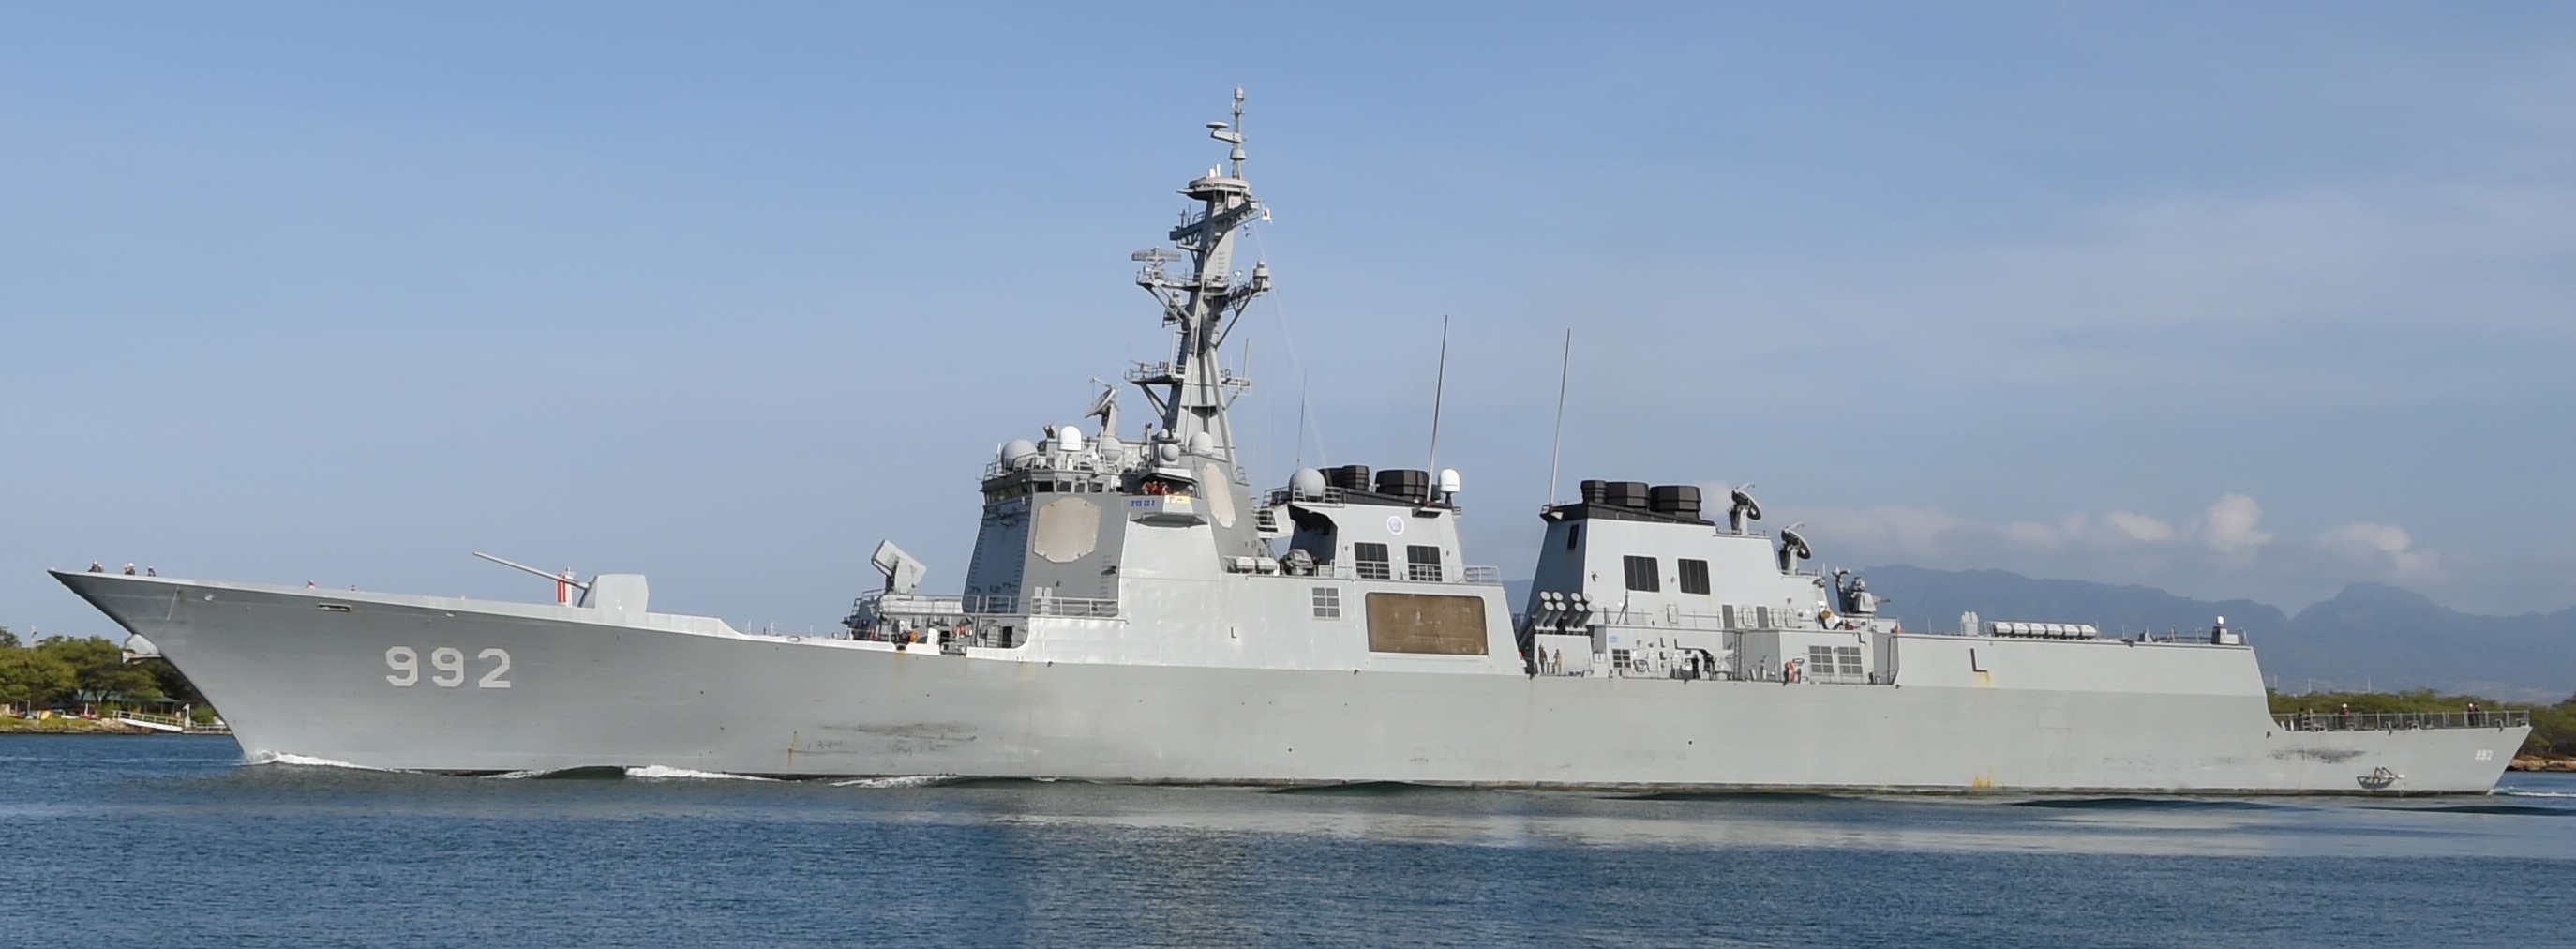 ddg-992 roks yulgok yi i sejong the great class guided missile destroyer aegis republic of korean navy rokn 09